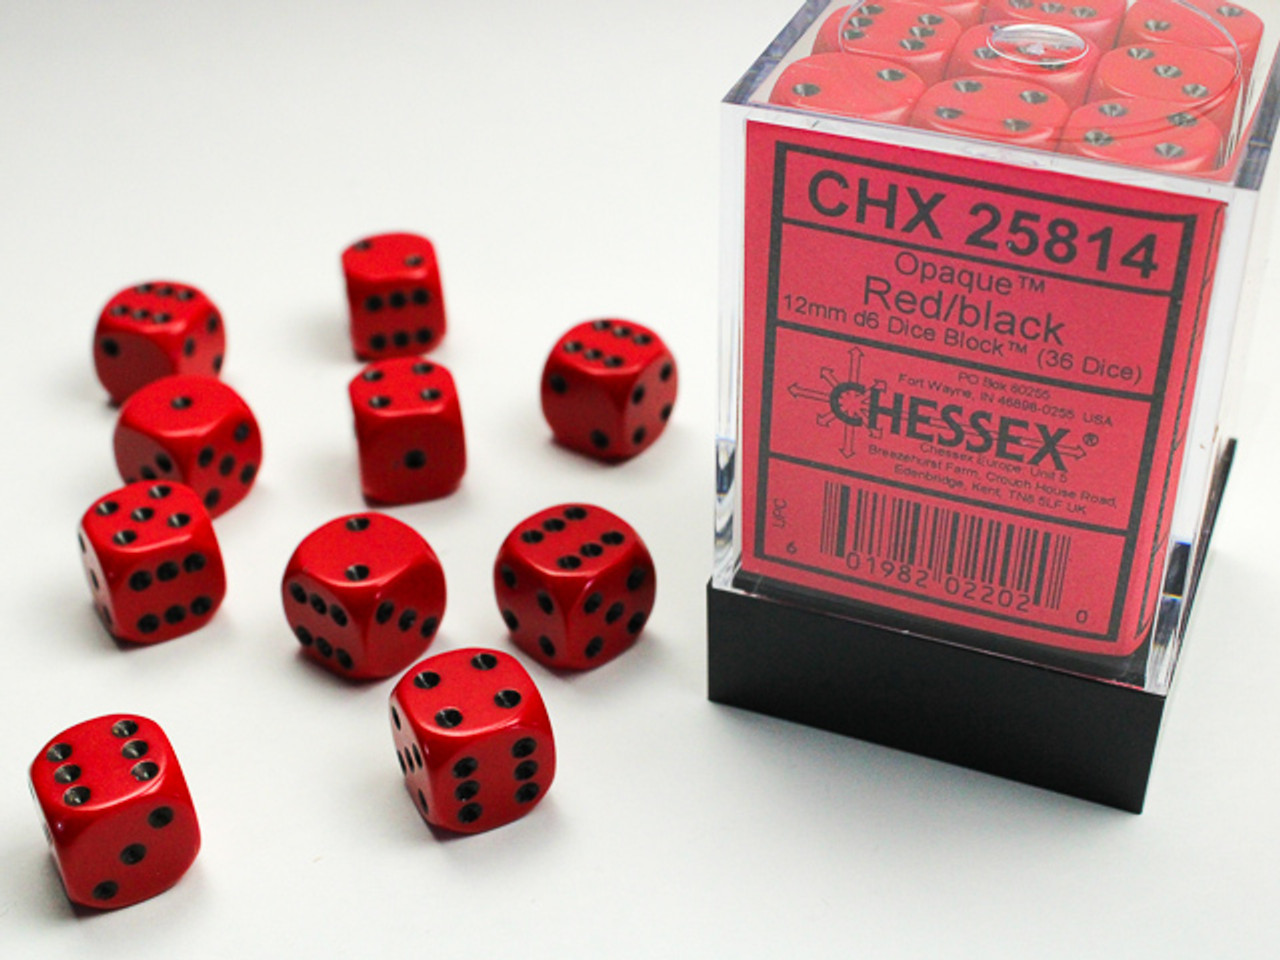 25814 - Opaque 12mm d6 Red/black Dice Block™ (36 dice)